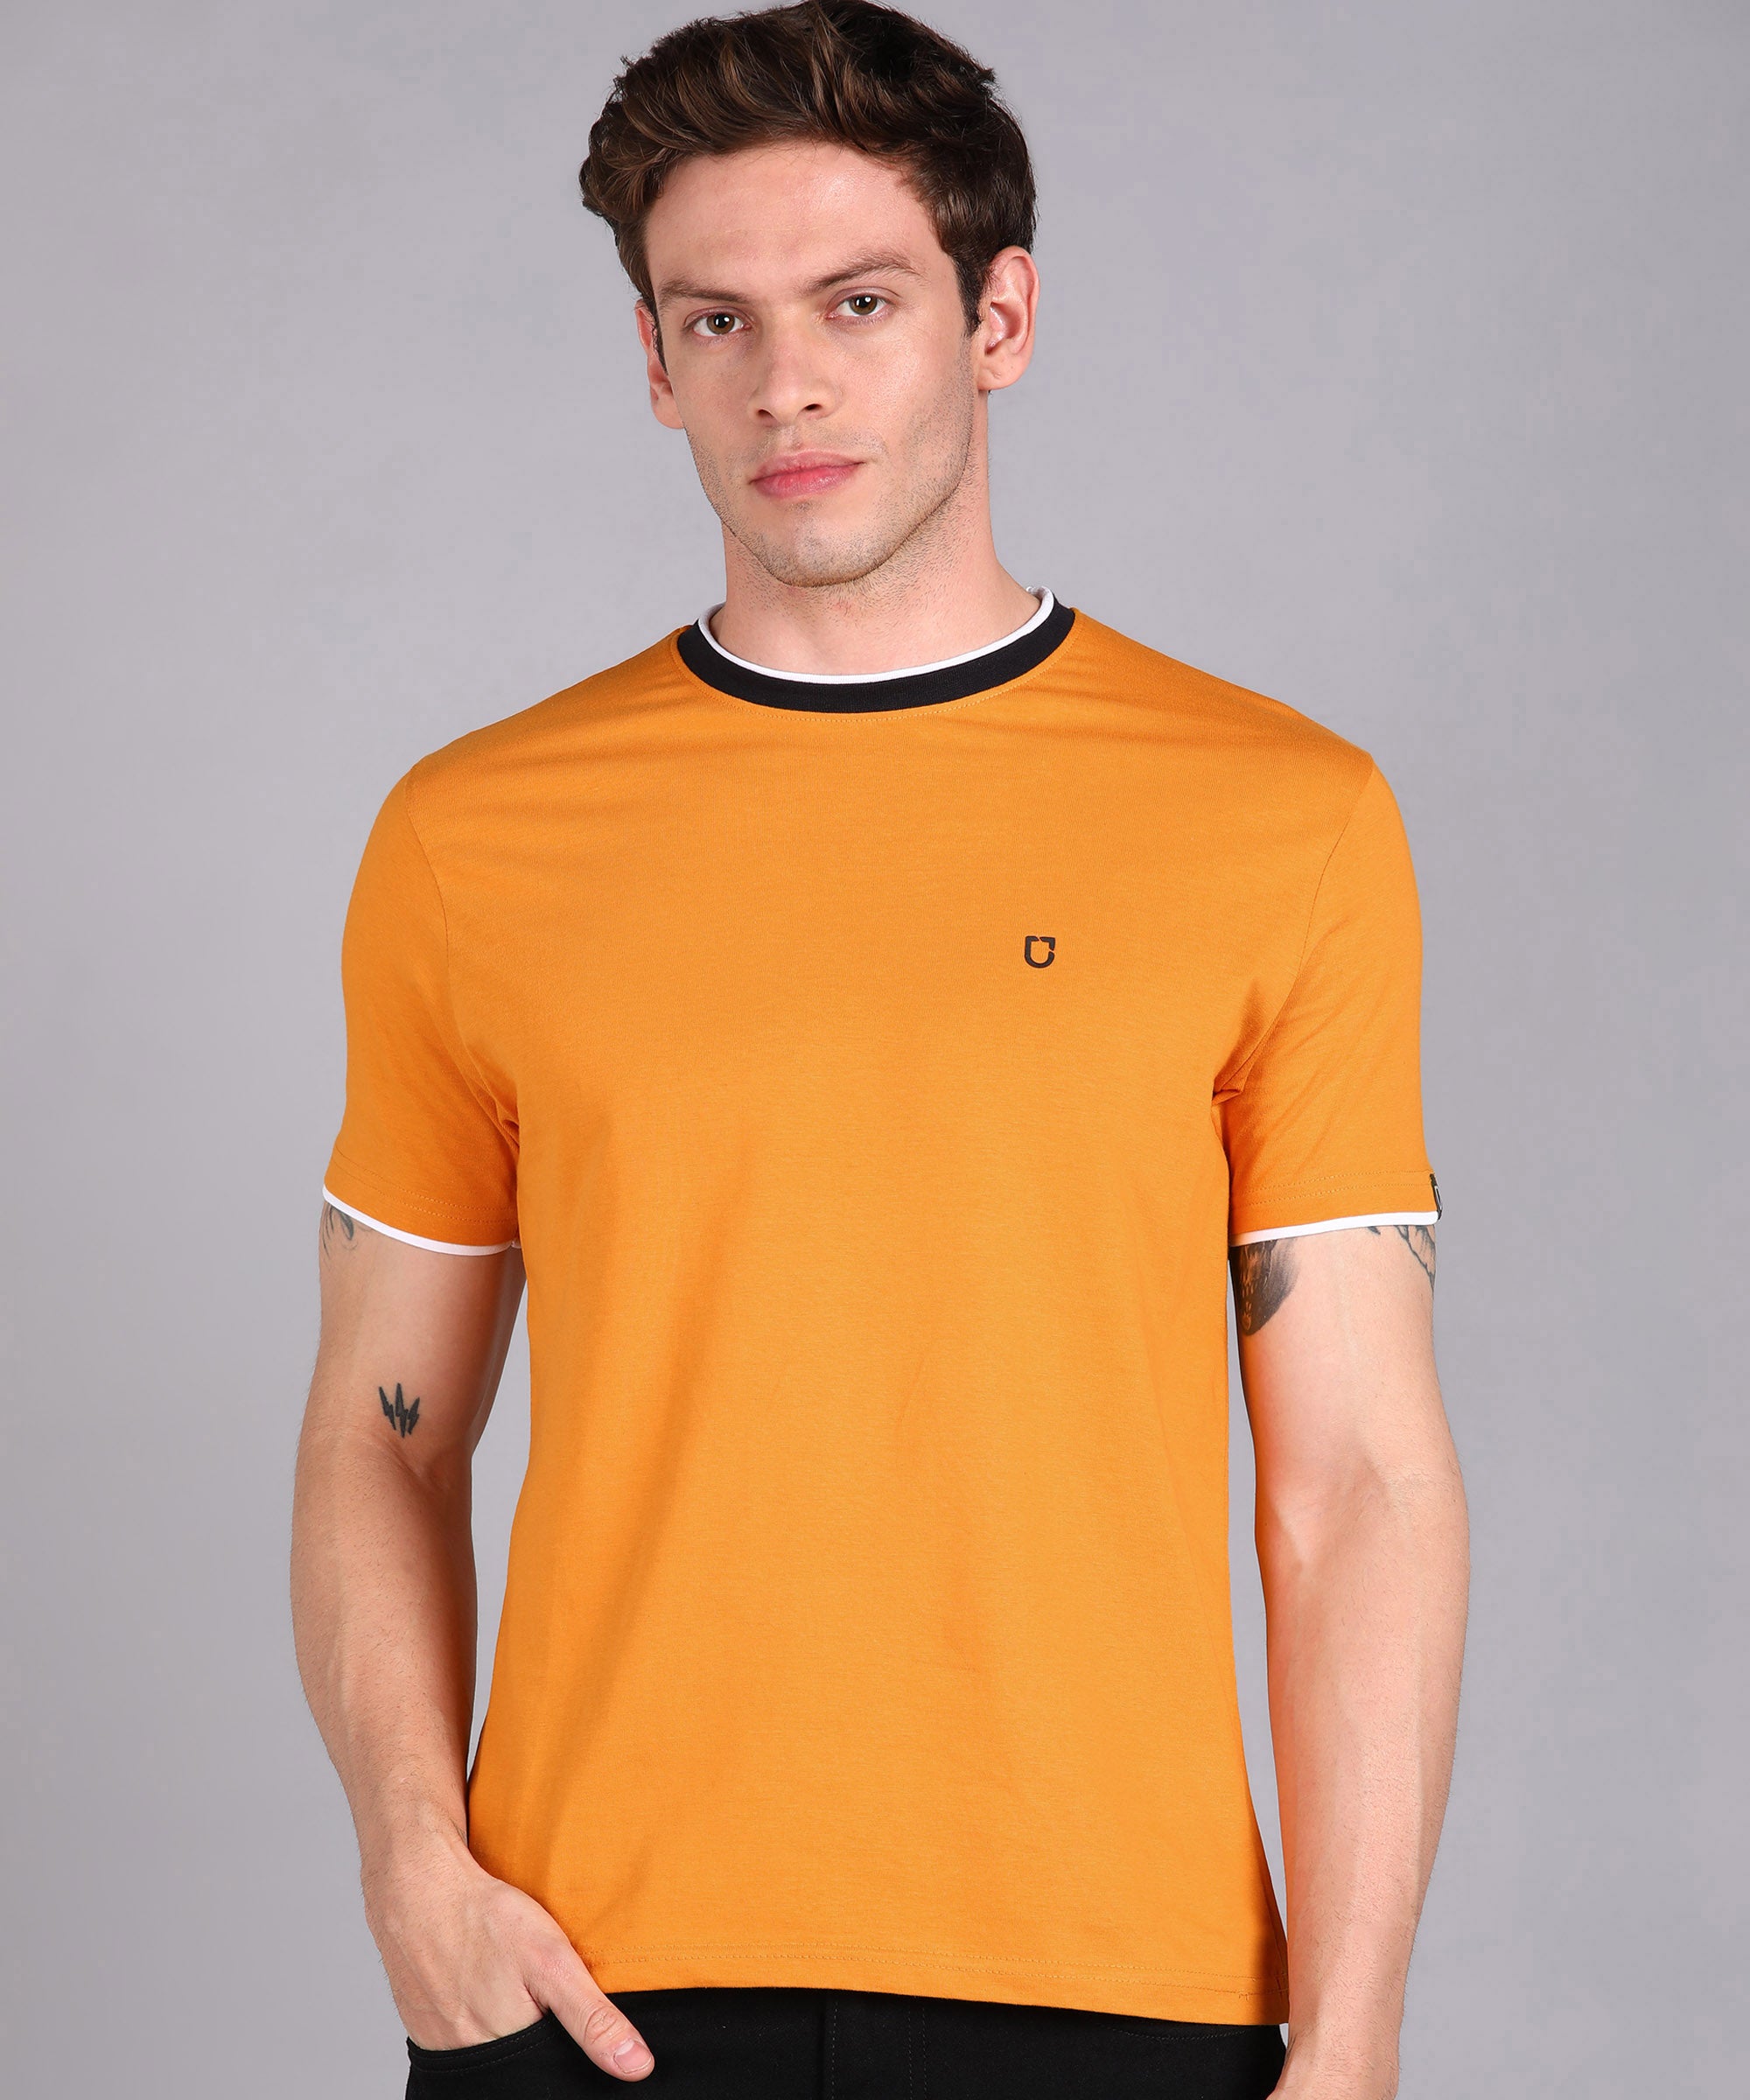 Urbano Fashion Men's Solid Gold Round Neck Half Sleeve Slim Fit Cotton T-Shirt